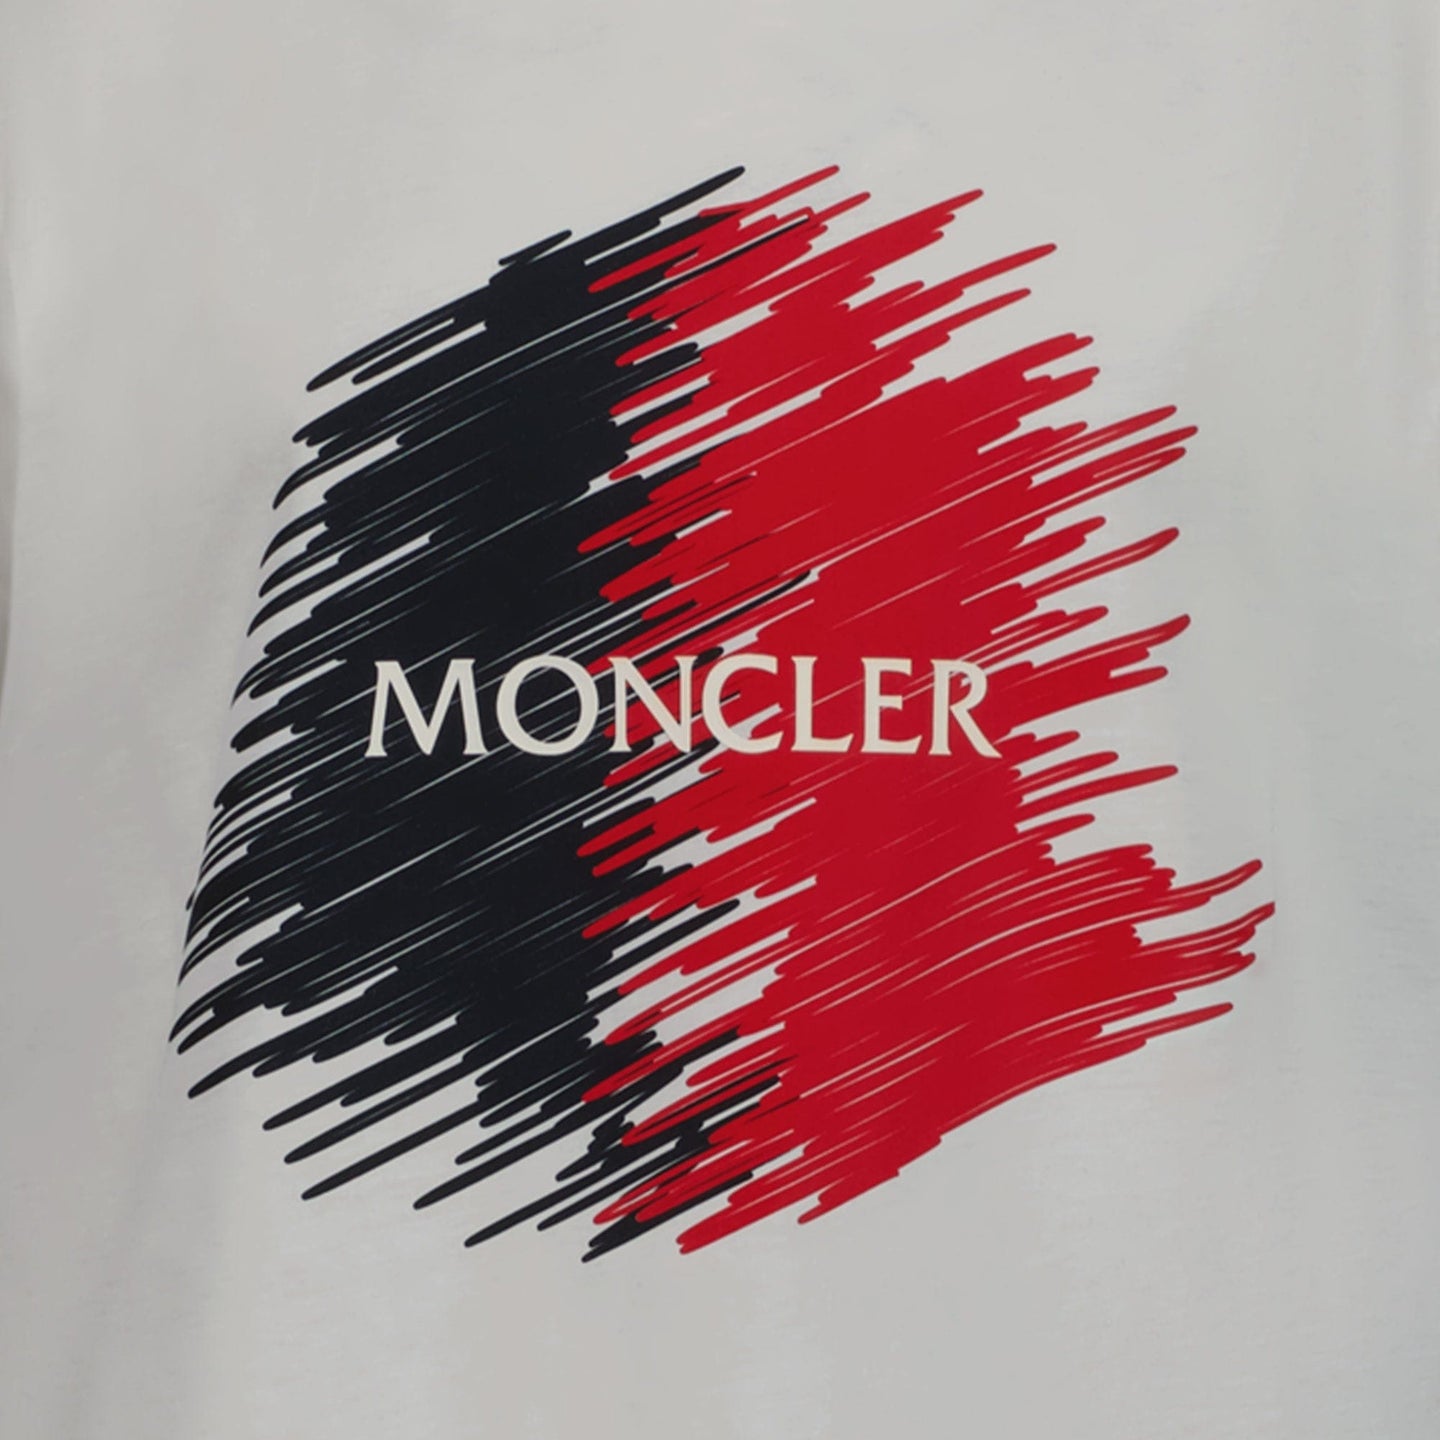 Moncler Kinder Jongens T-Shirt Wit 4Y